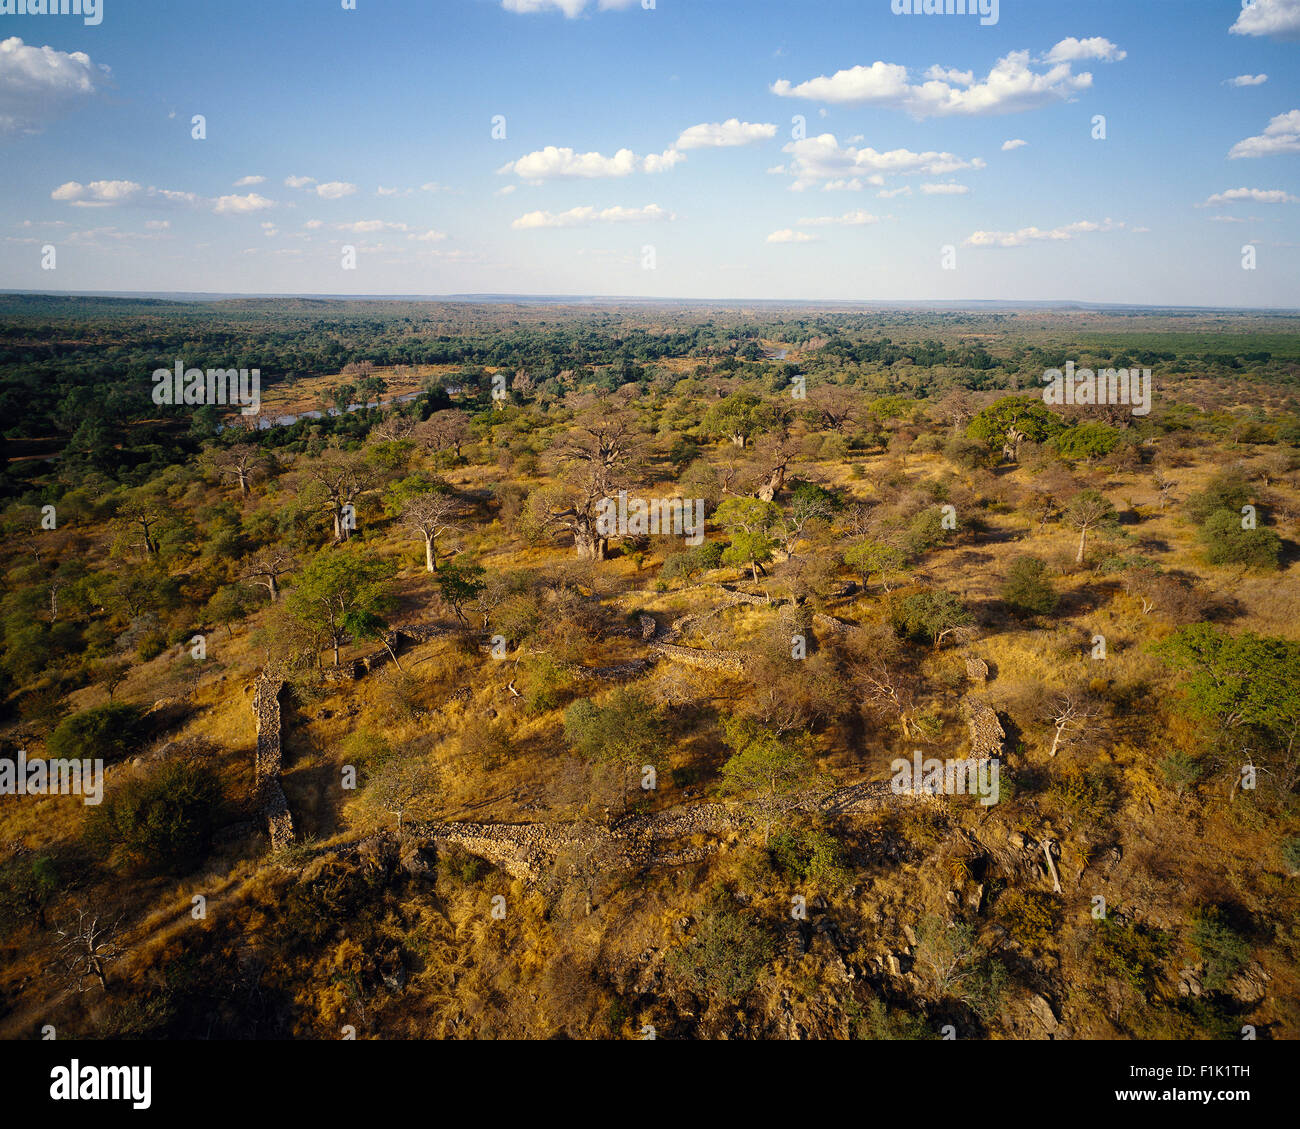 Thulamela rovine nei pressi di Punda Maria Kruger National Park nella provincia settentrionale, Sud Africa Foto Stock